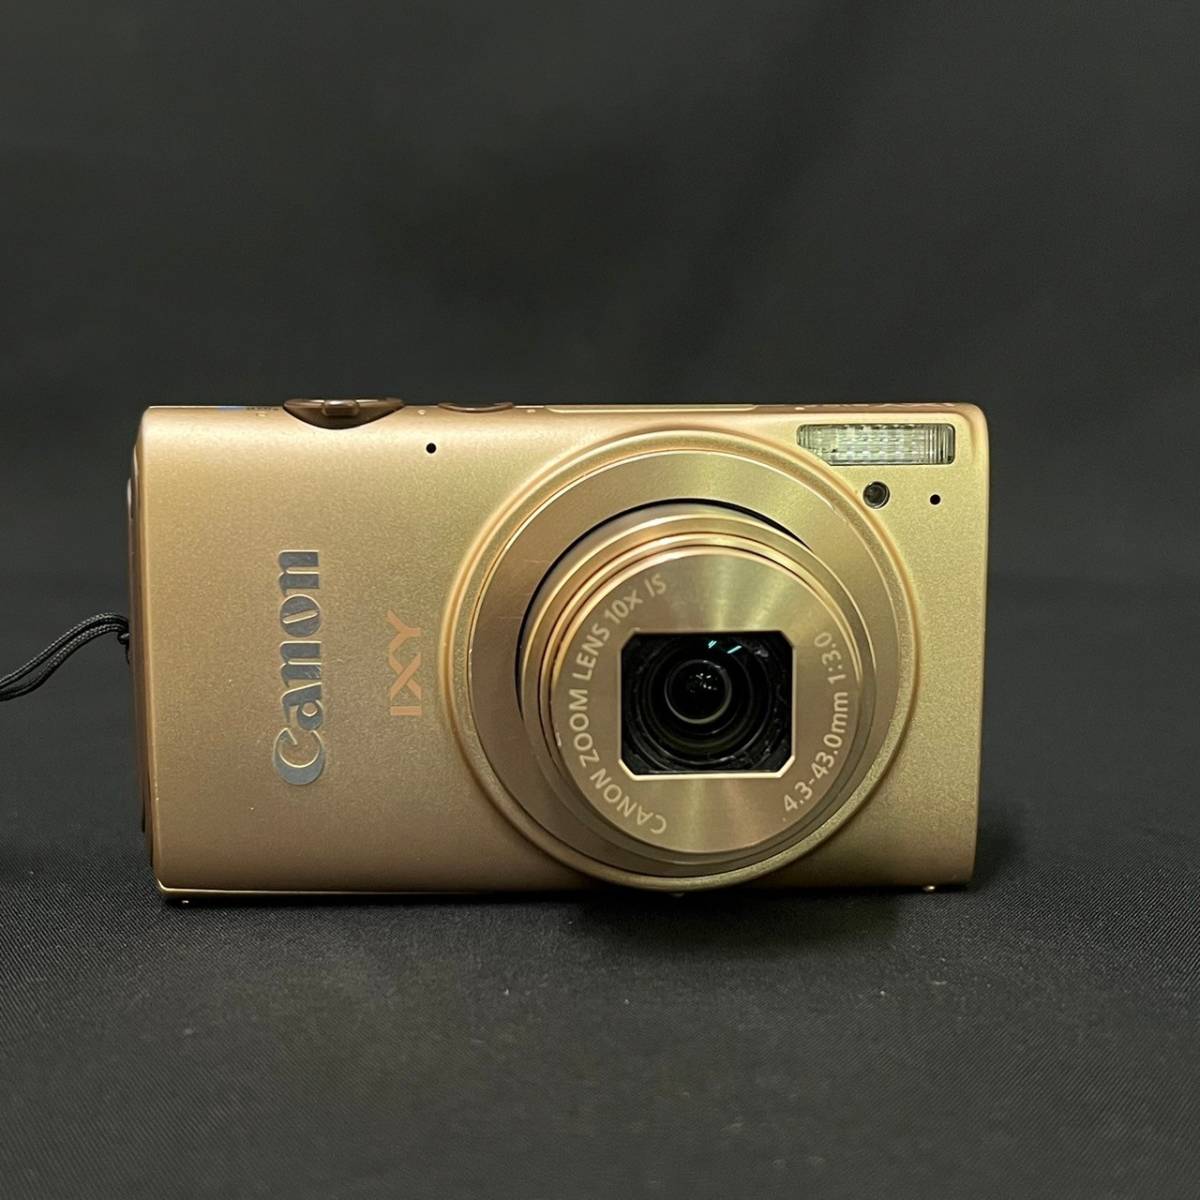 BAg132I 60 Canon IXY 610F デジタルカメラ フルHD ゴールド 4.3-43.0mm 1:3.0-6.9 SDカード16GB Wi-Fi 顔認識 AF自動追尾 手ブレ補正 _画像2